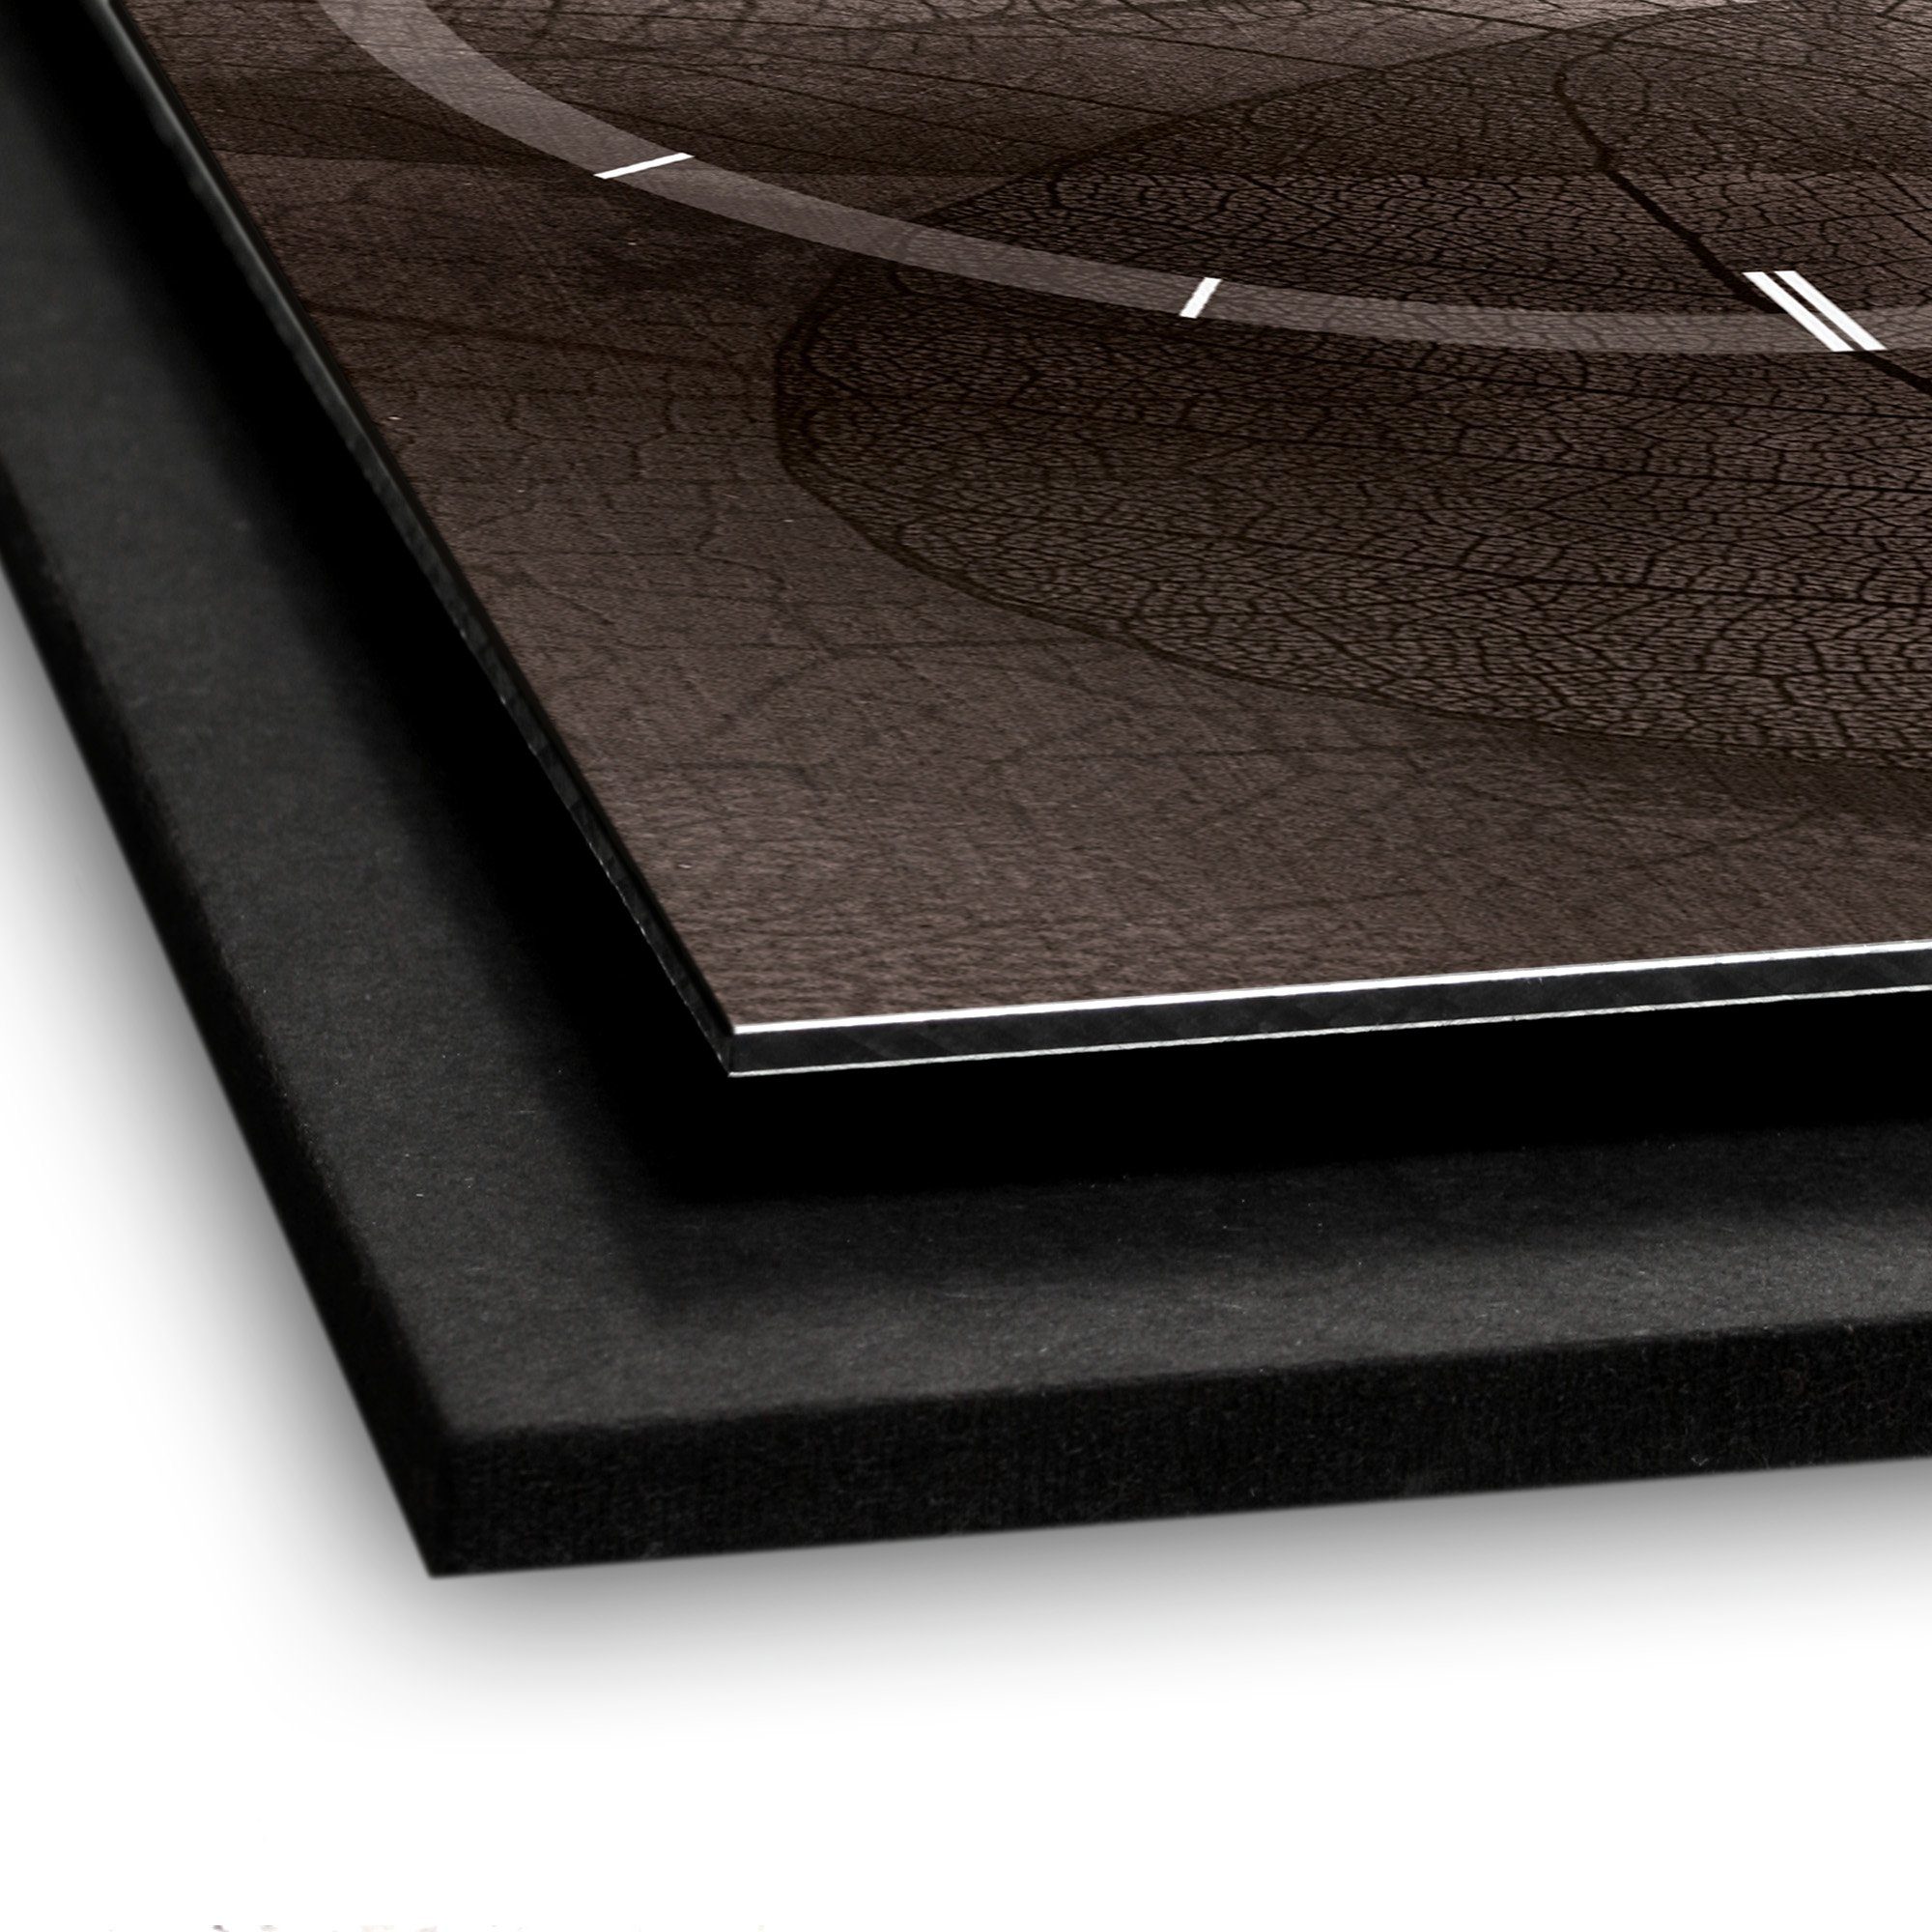 Feder Kreative groß Quarzuhr modern) Brown metallic Wanduhr (Funkuhr abstrakt 3D Leaves 50x30cm Designer-Wanduhr oder